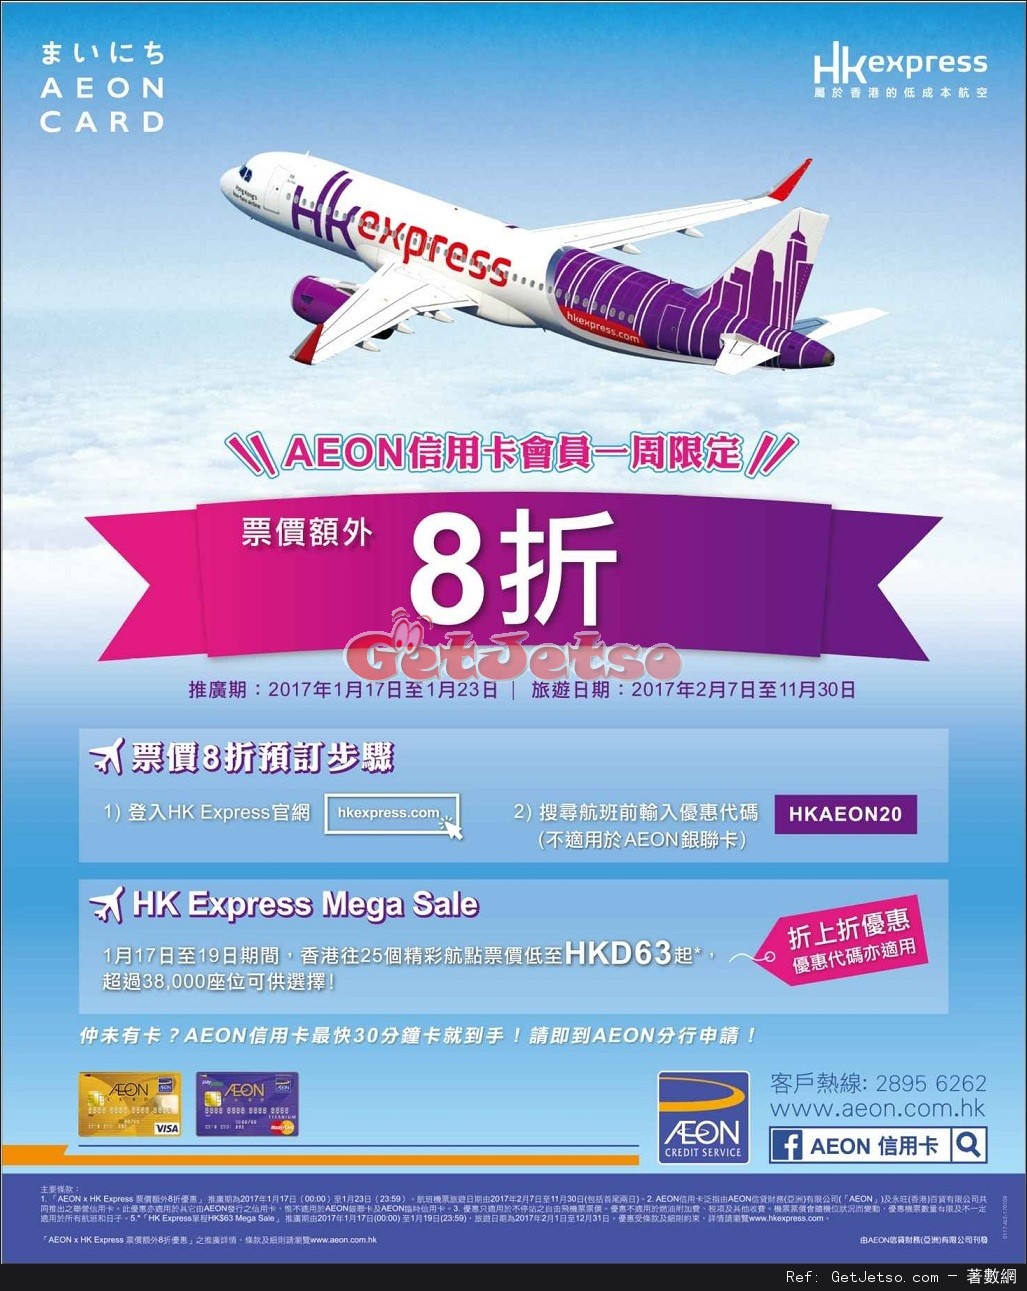 AEON 信用卡享HK Express 票價額外8折優惠(至17年1月23日)圖片1